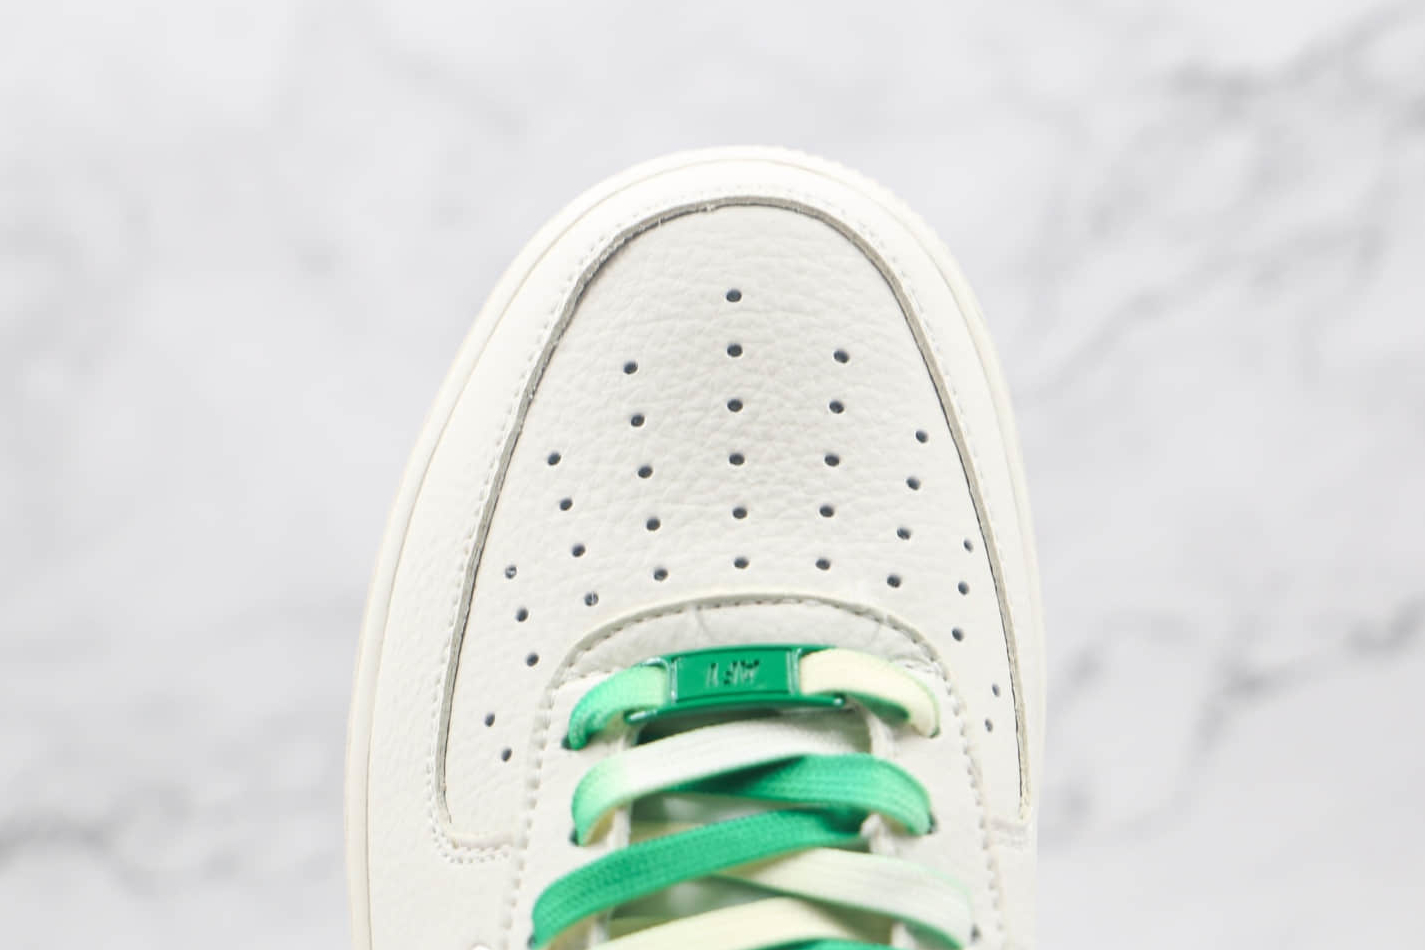 Nike Air Force 1 07 Low Su19 White Green Shoes BO6638-160 - Premium Sneakers for Men